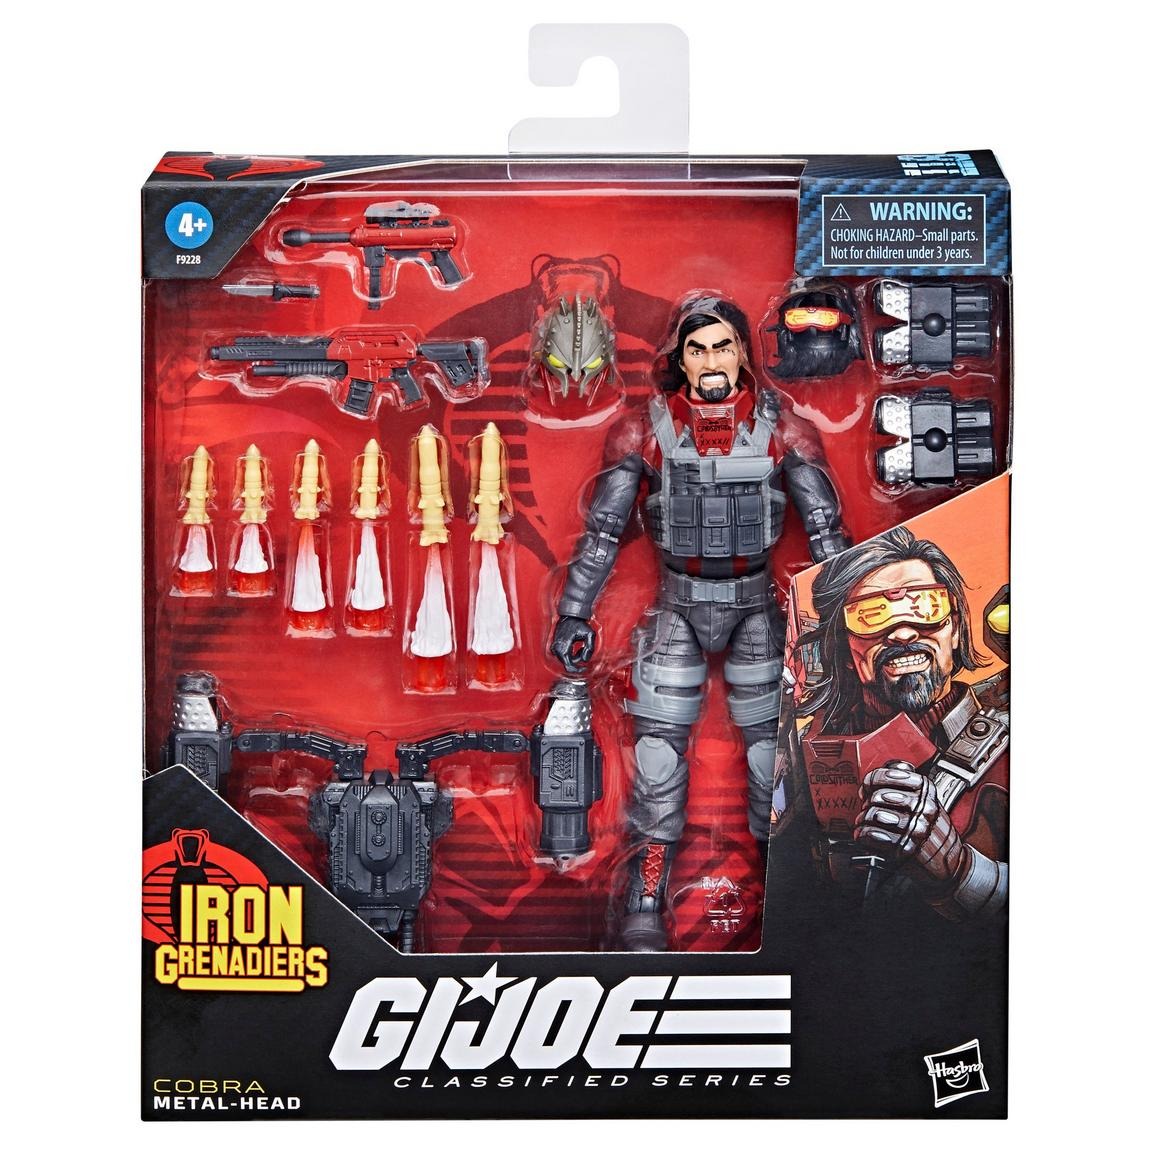 G.I. Joe Classified Series Iron Grenadier Metal-Head Action Figure